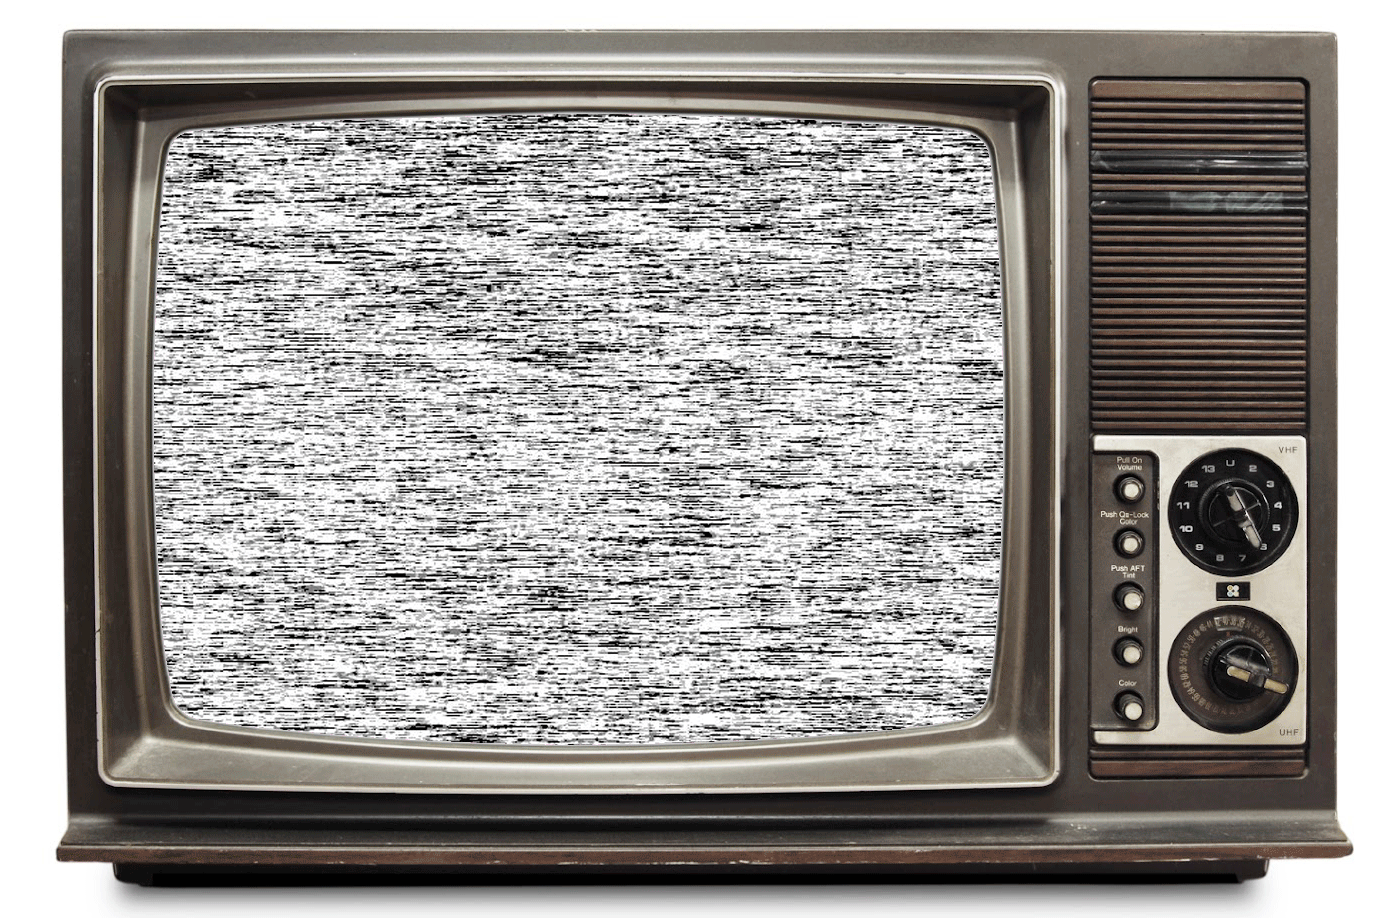 Tv old 2. Ламповый телевизор сигнал 2. Старый телевизор. Старинный телевизор. Экран старого телевизора.